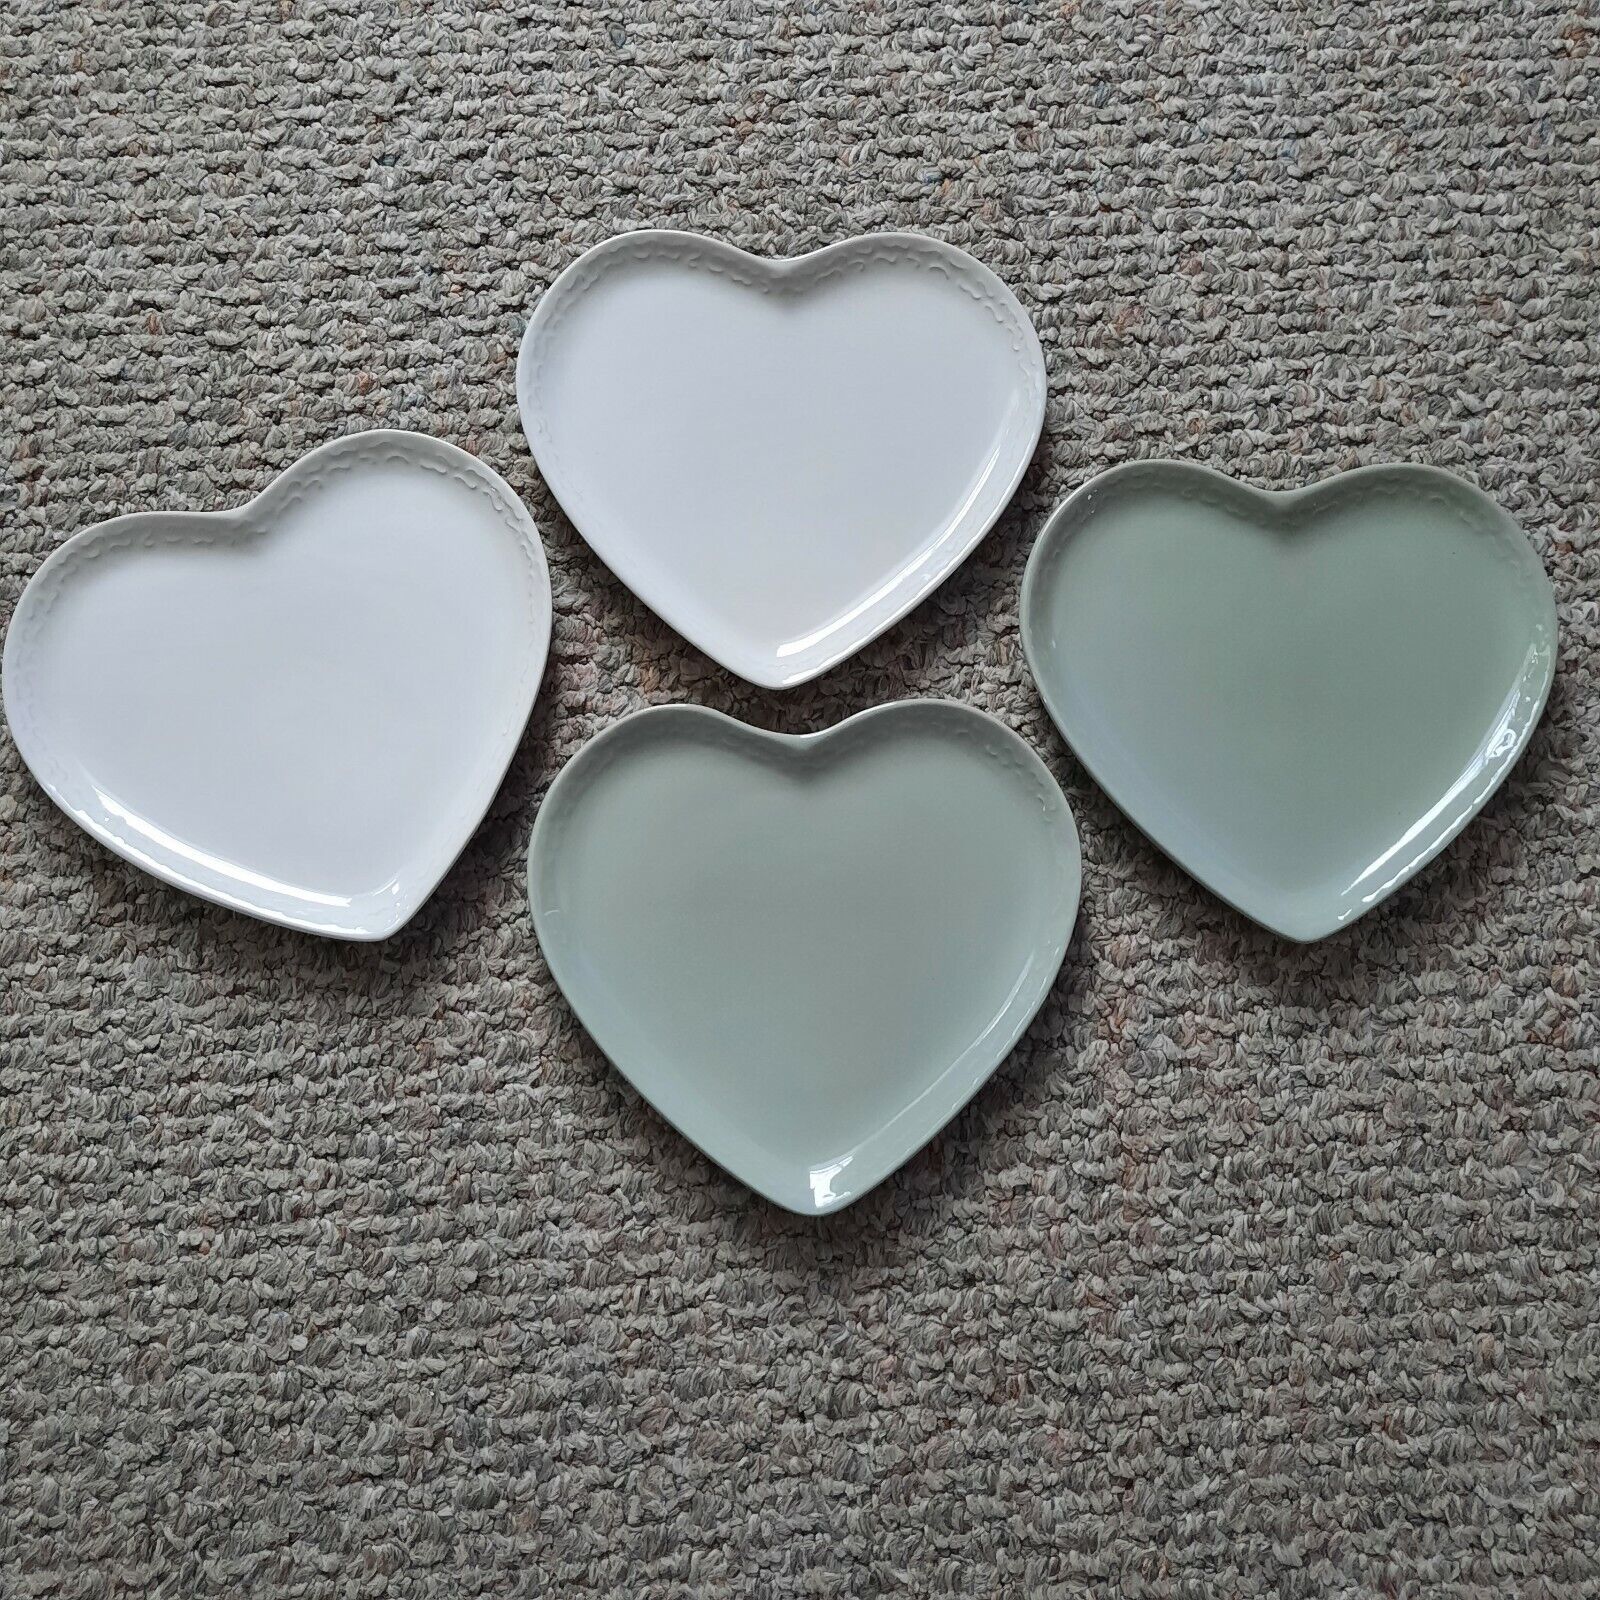 NOS the homemaker idea co set of 4 heart shaped plates. 2 green, 2 white